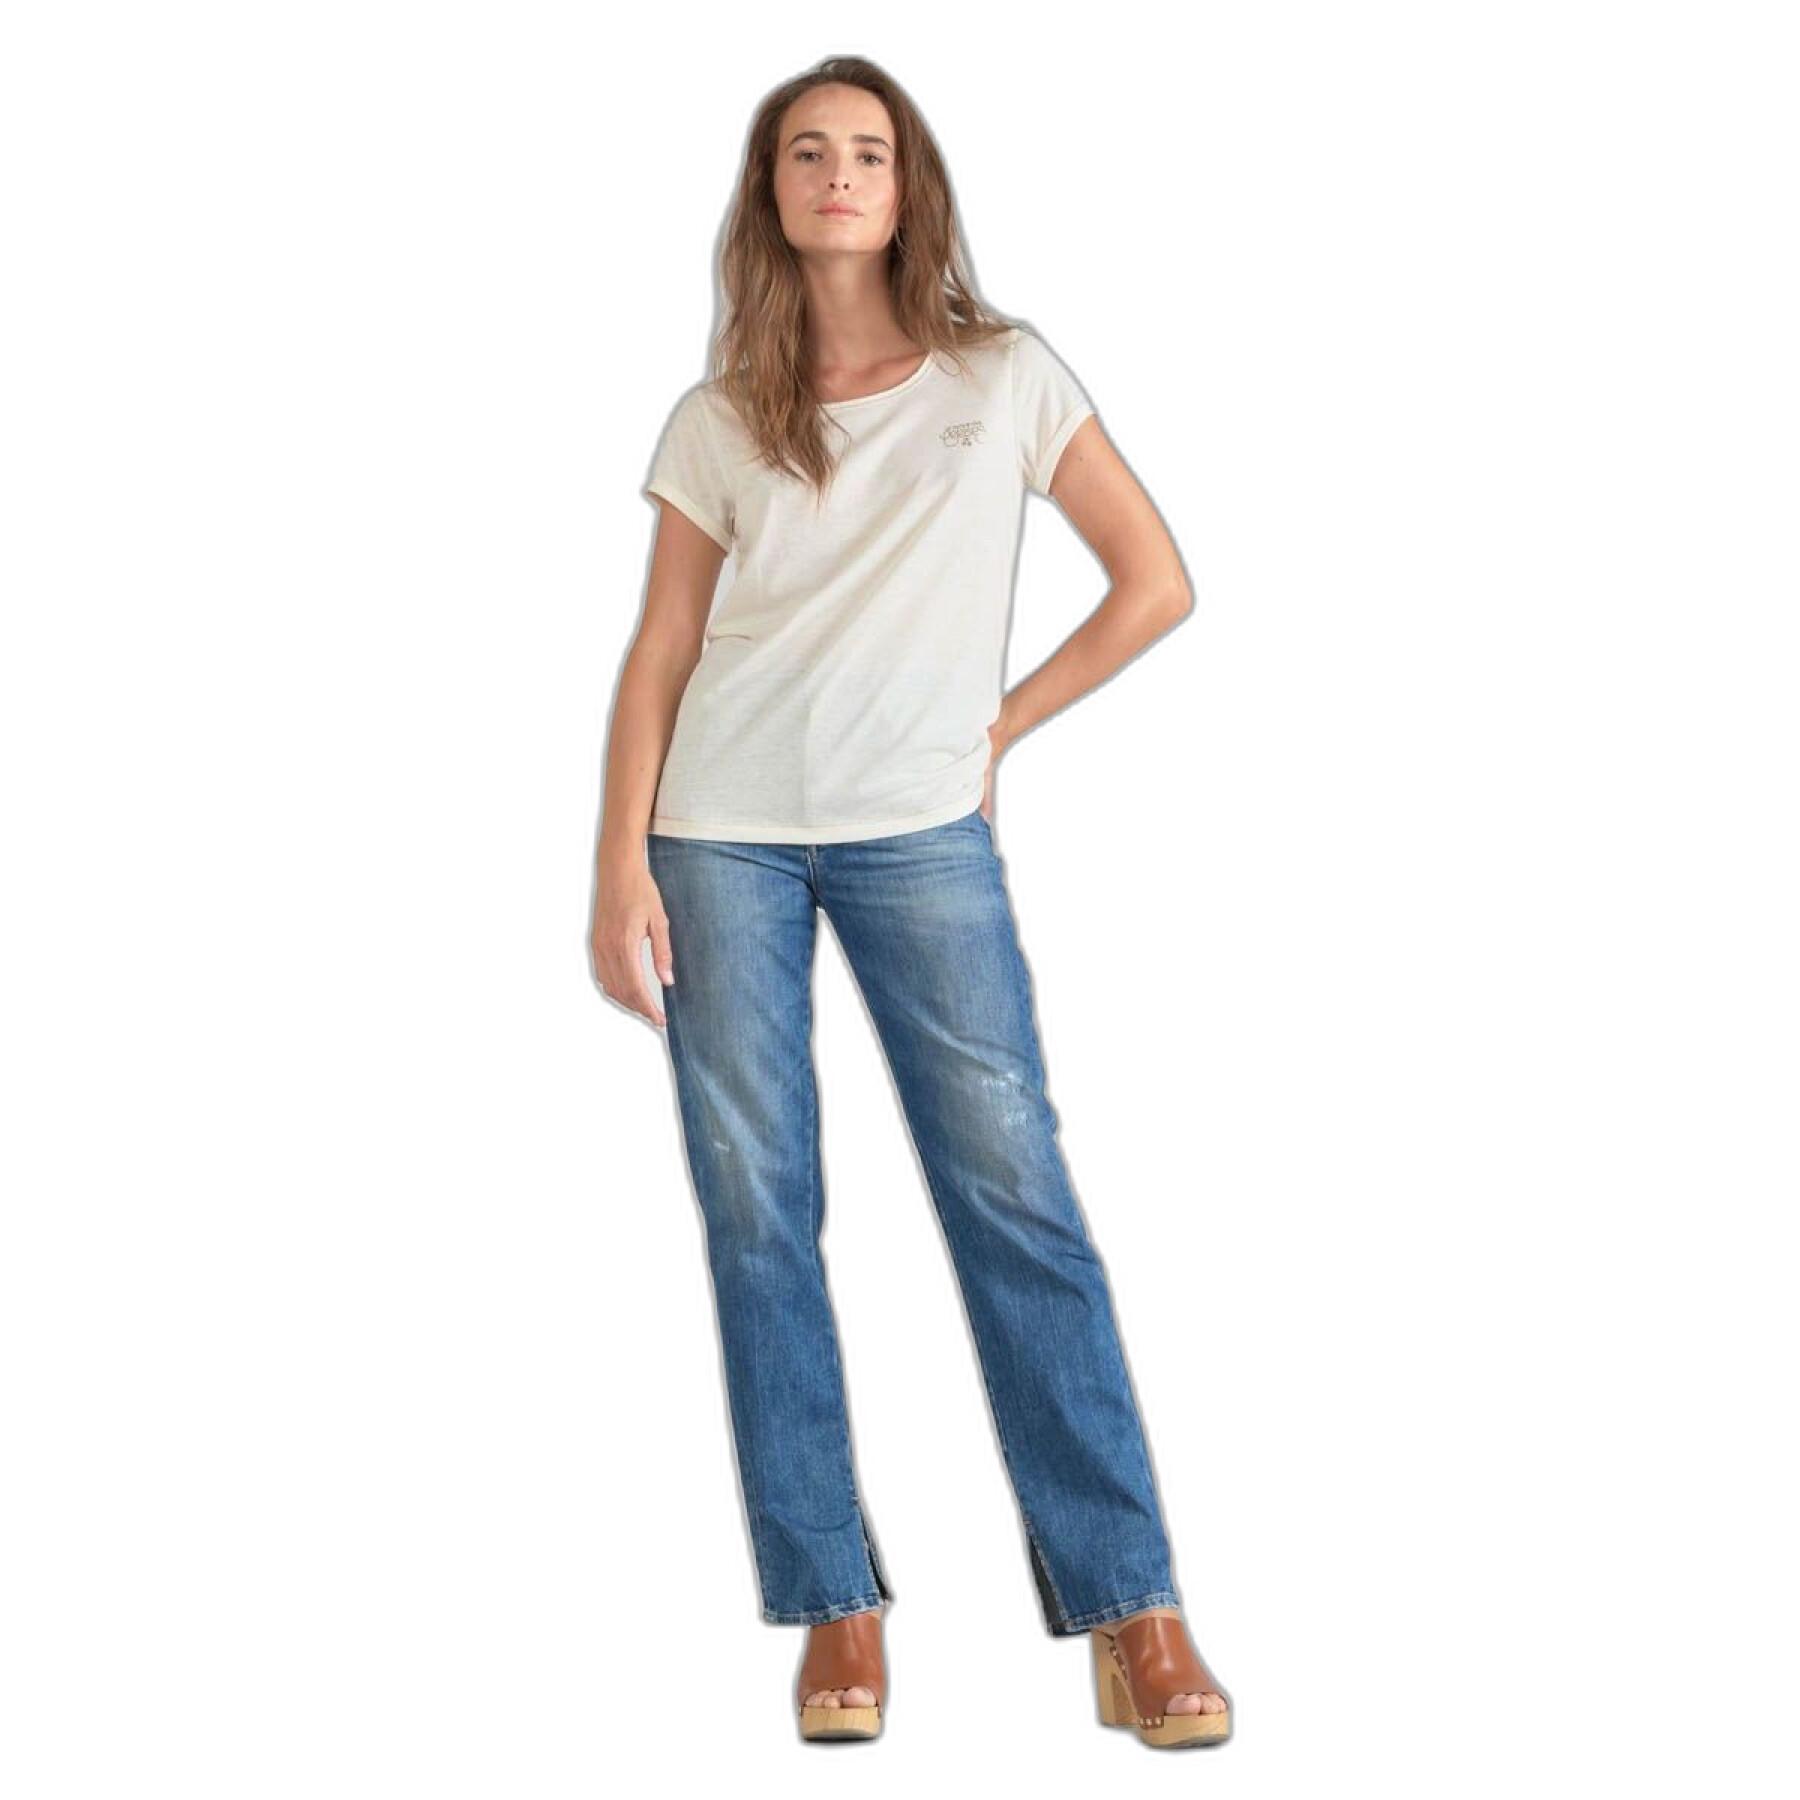 Women\'s T-shirt Le - and tops - tank Woman Temps Smallvtrame - T-shirts Lifestyle cerises des